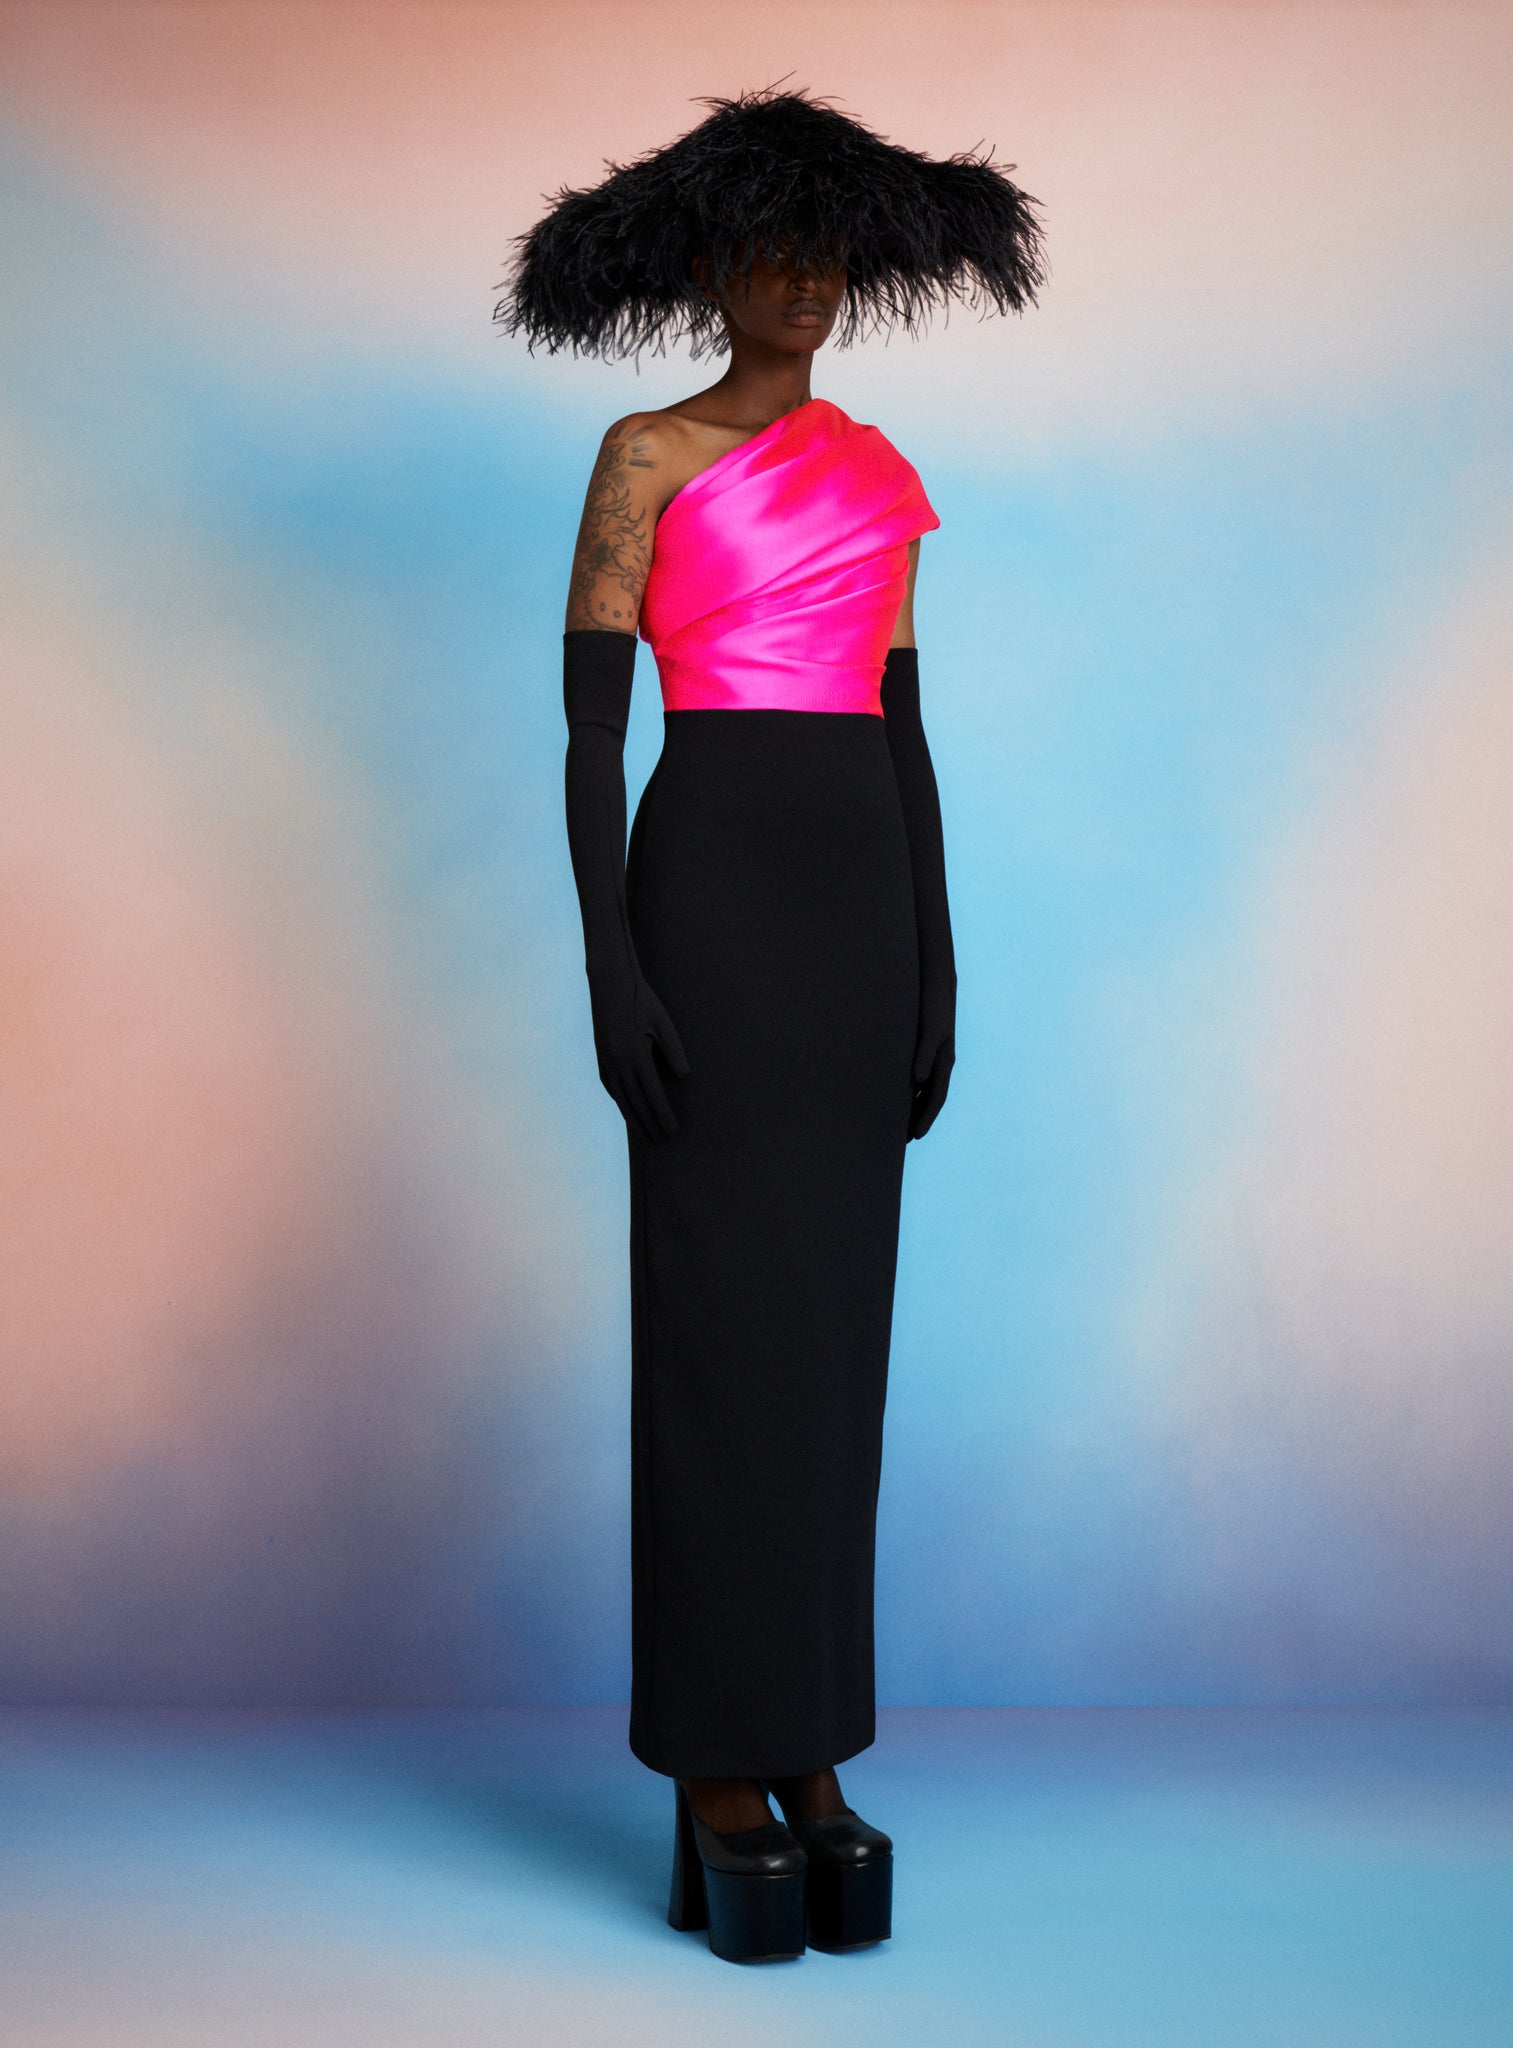 The Selia Maxi Dress in Hot Pink & Black